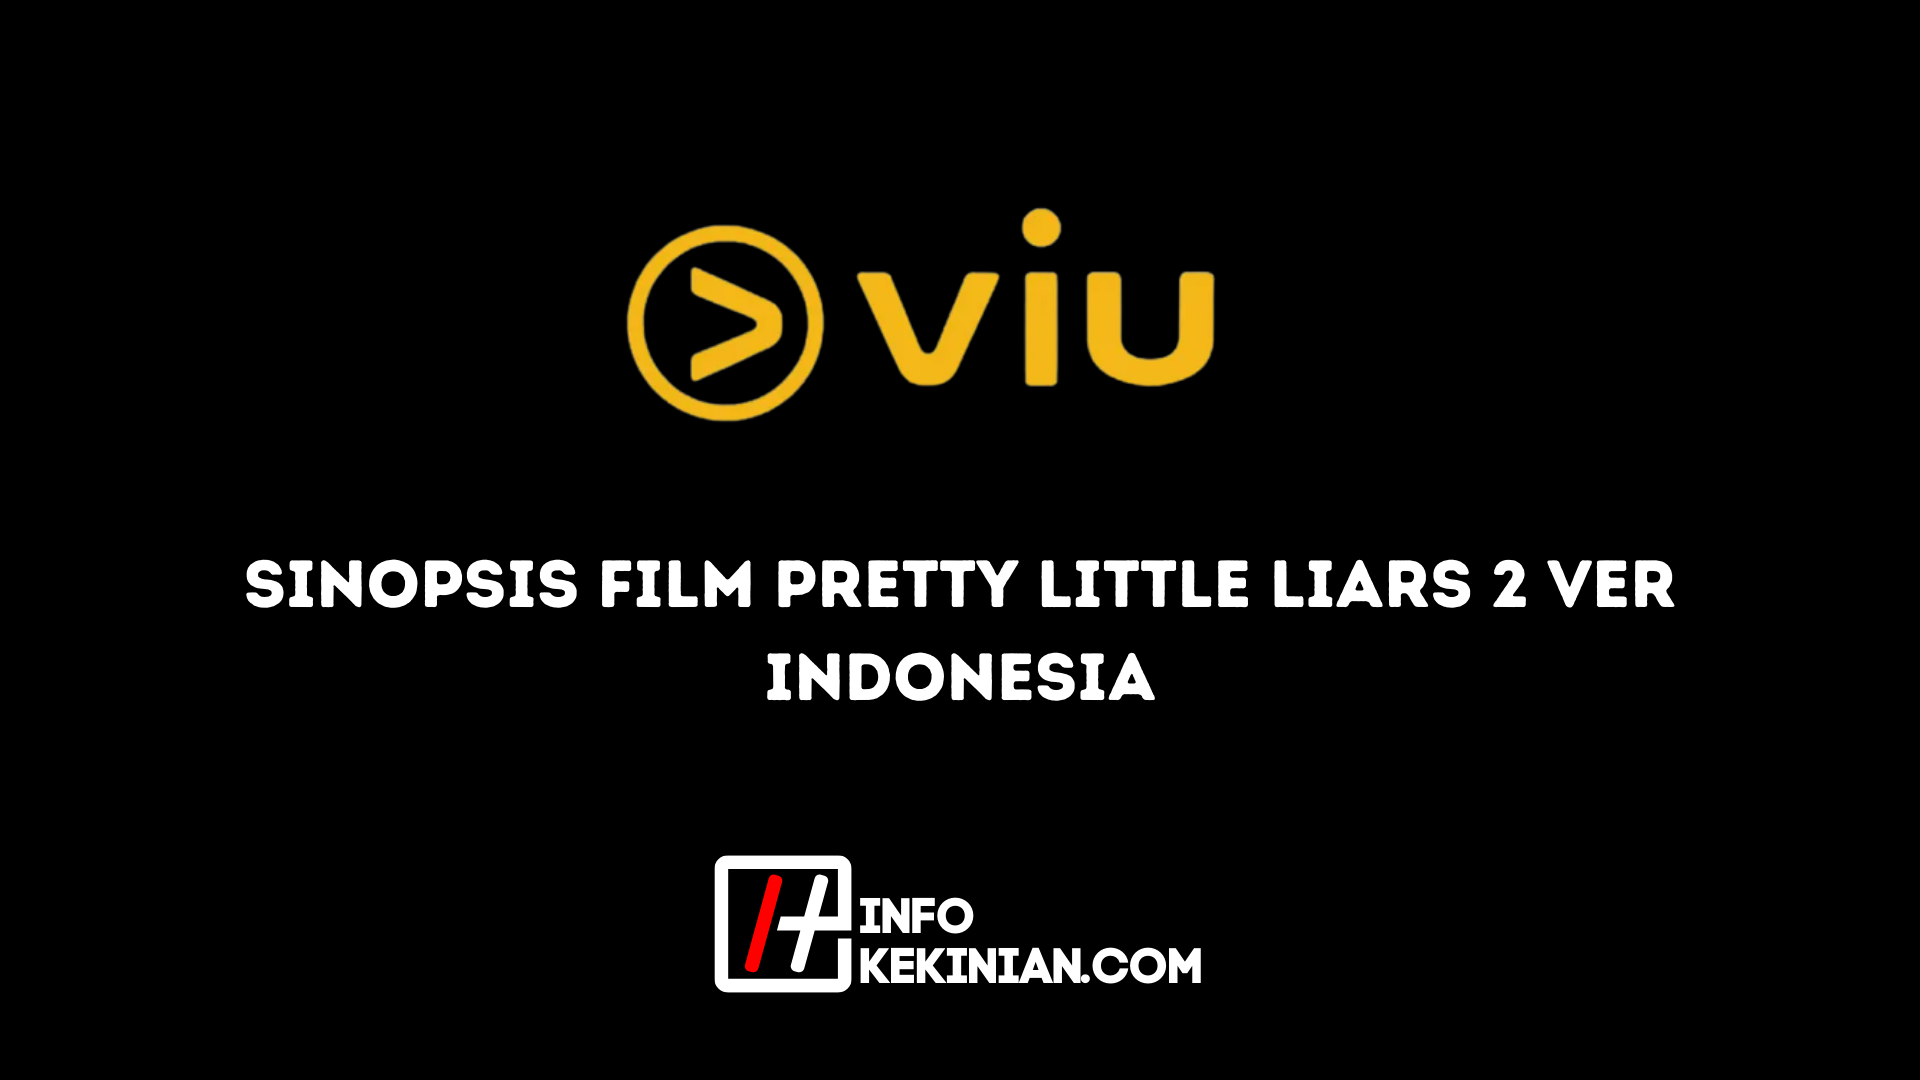 Synopsis Film Pretty Little Liars 2 version indonésienne